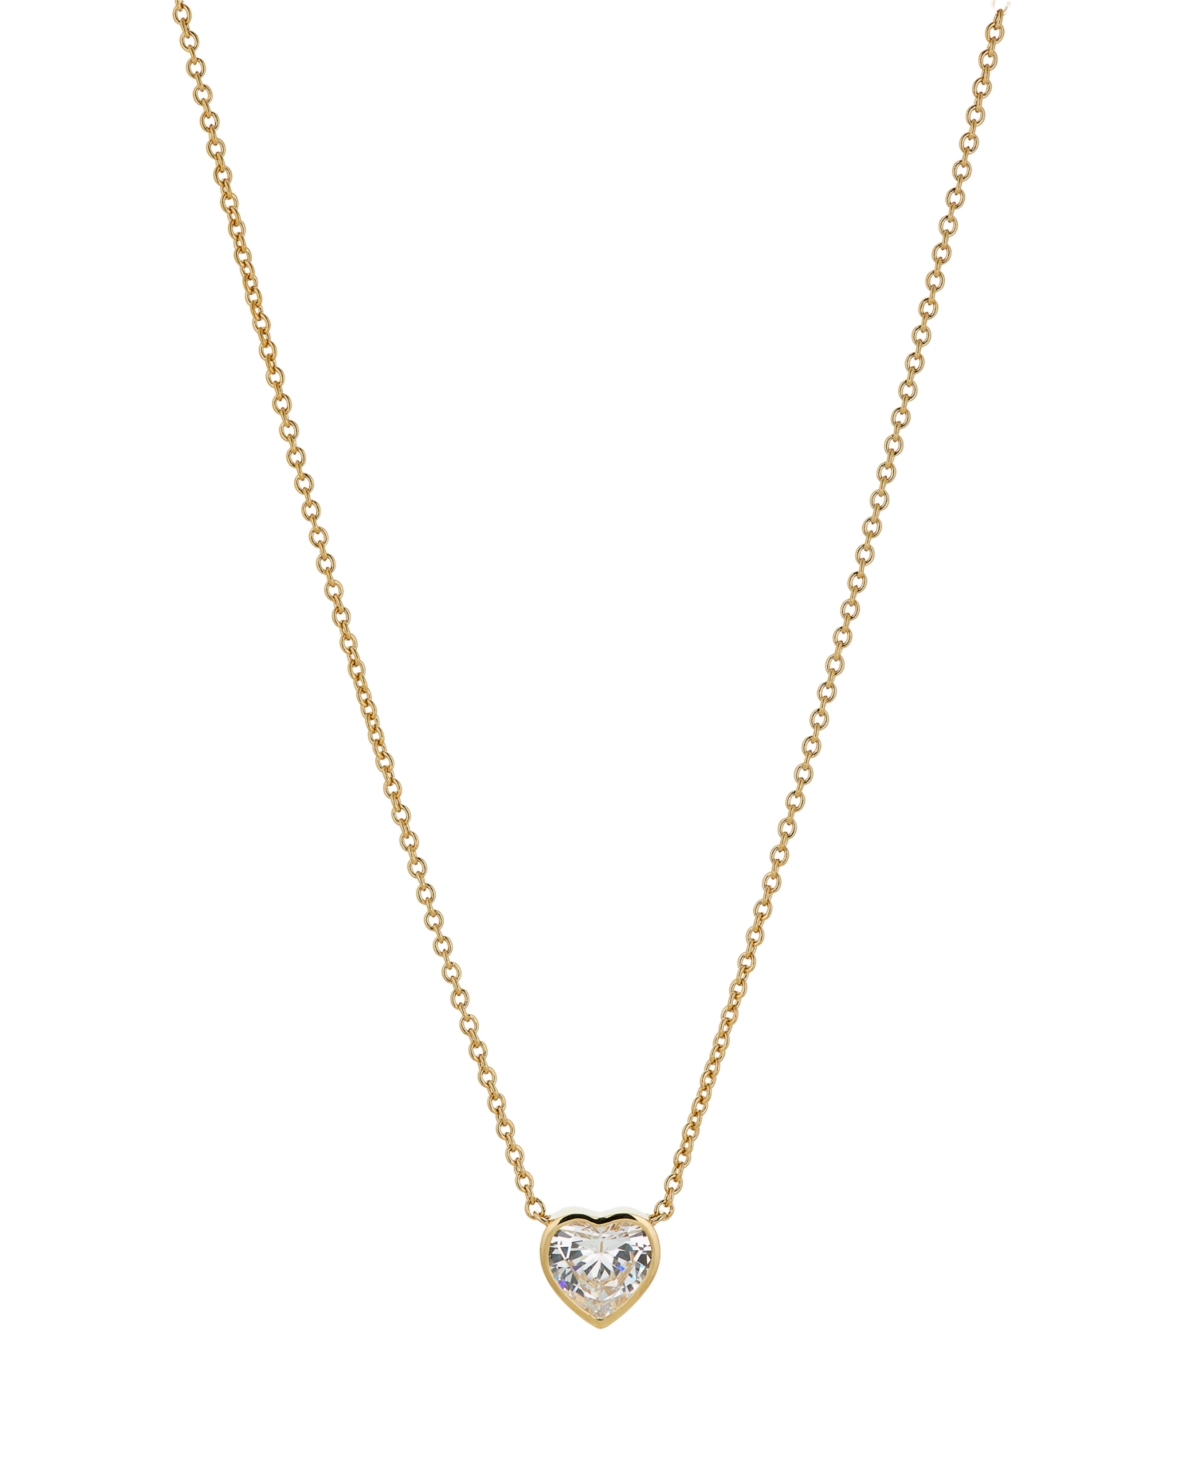 Eliot Danori Heart Shape Cubic Zirconia Necklace, Created for Macy's